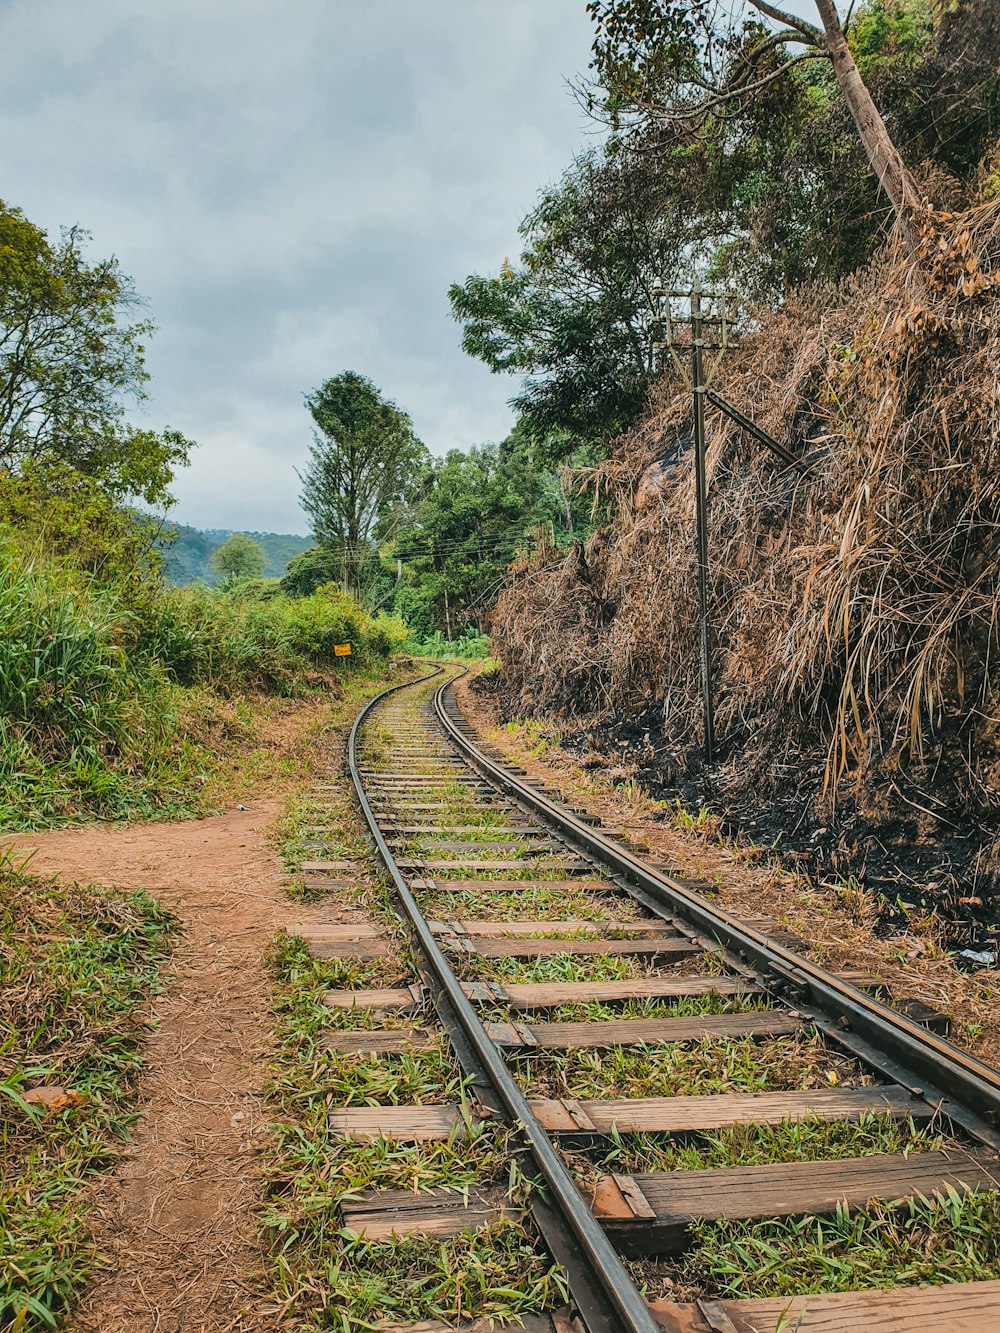 brown metal train rail near green trees during daytime